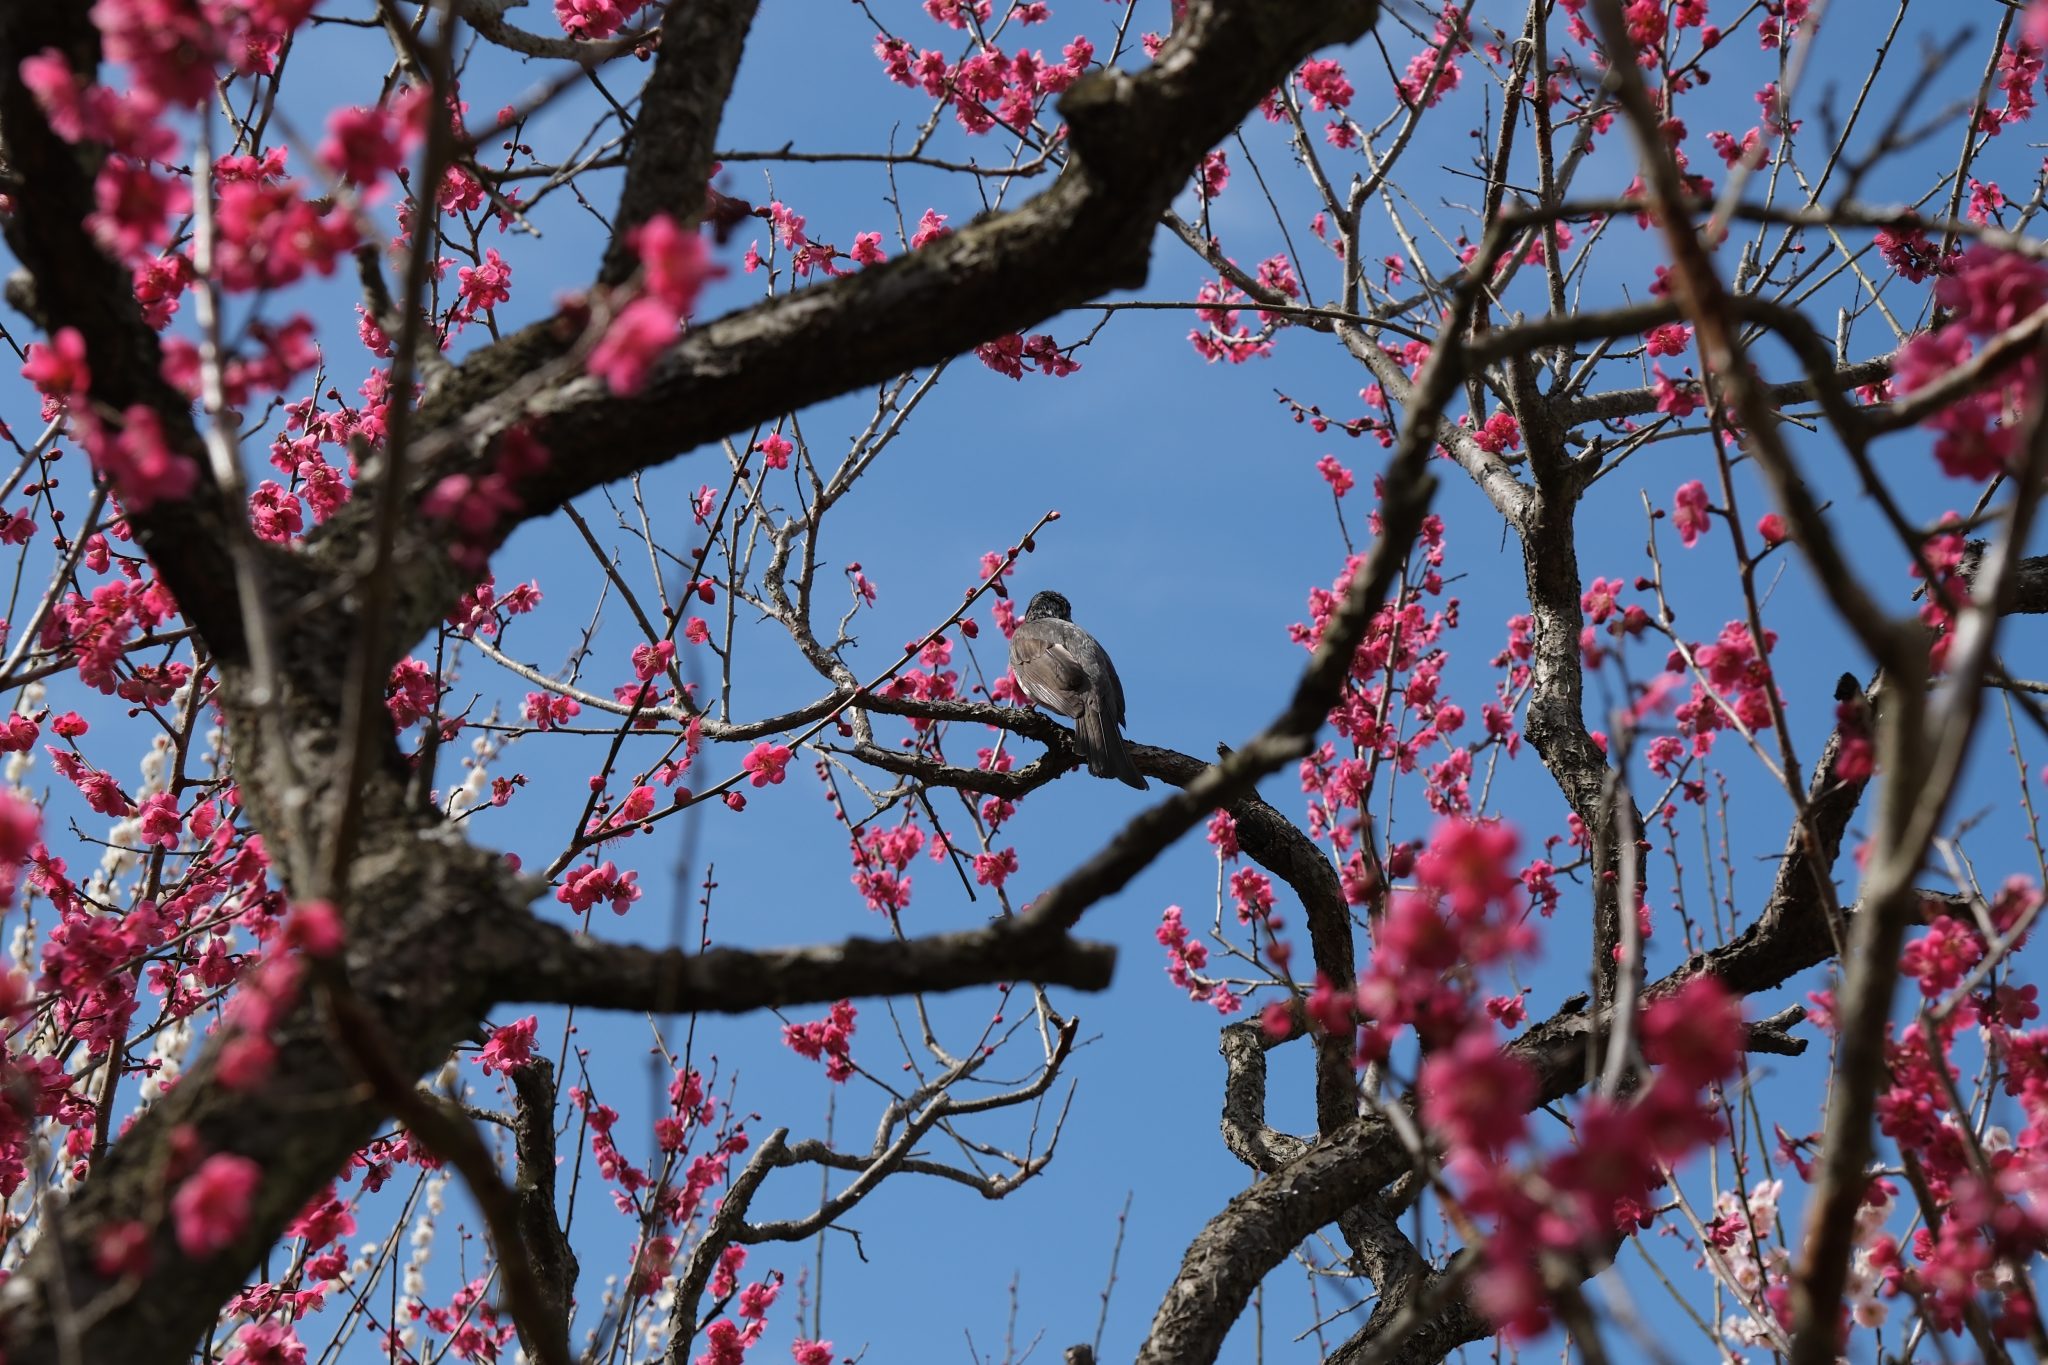 Bird on a branch in a flowering tree.